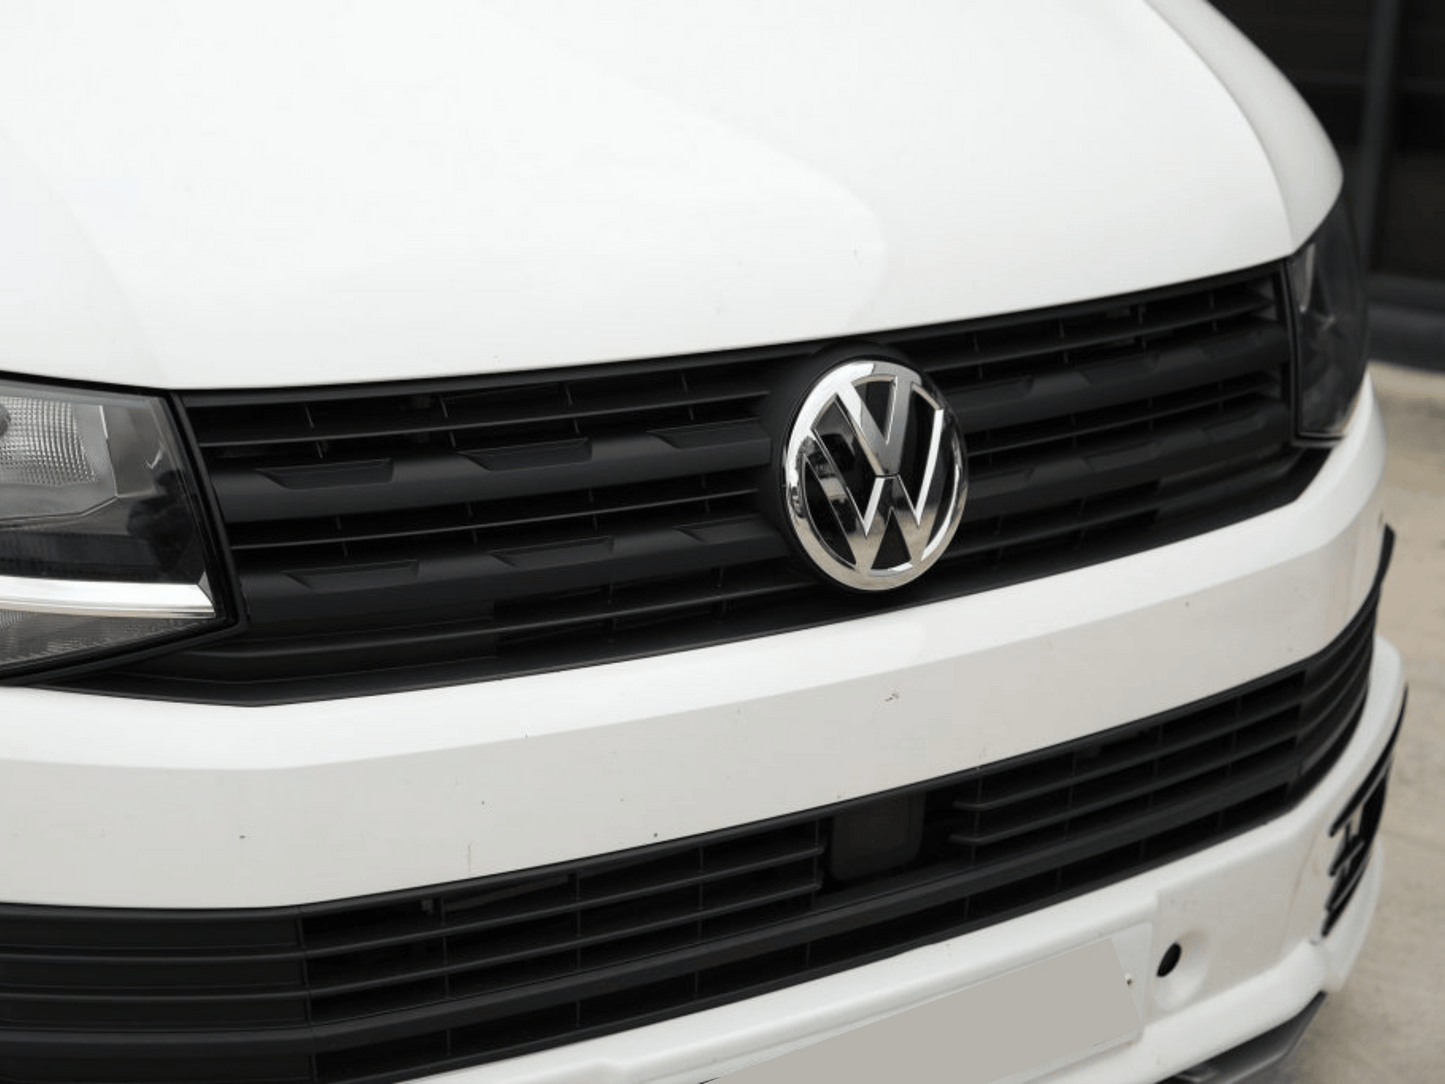 VW Transporter T6 R-Line grille-afwerking vooraan - glanzend zwart